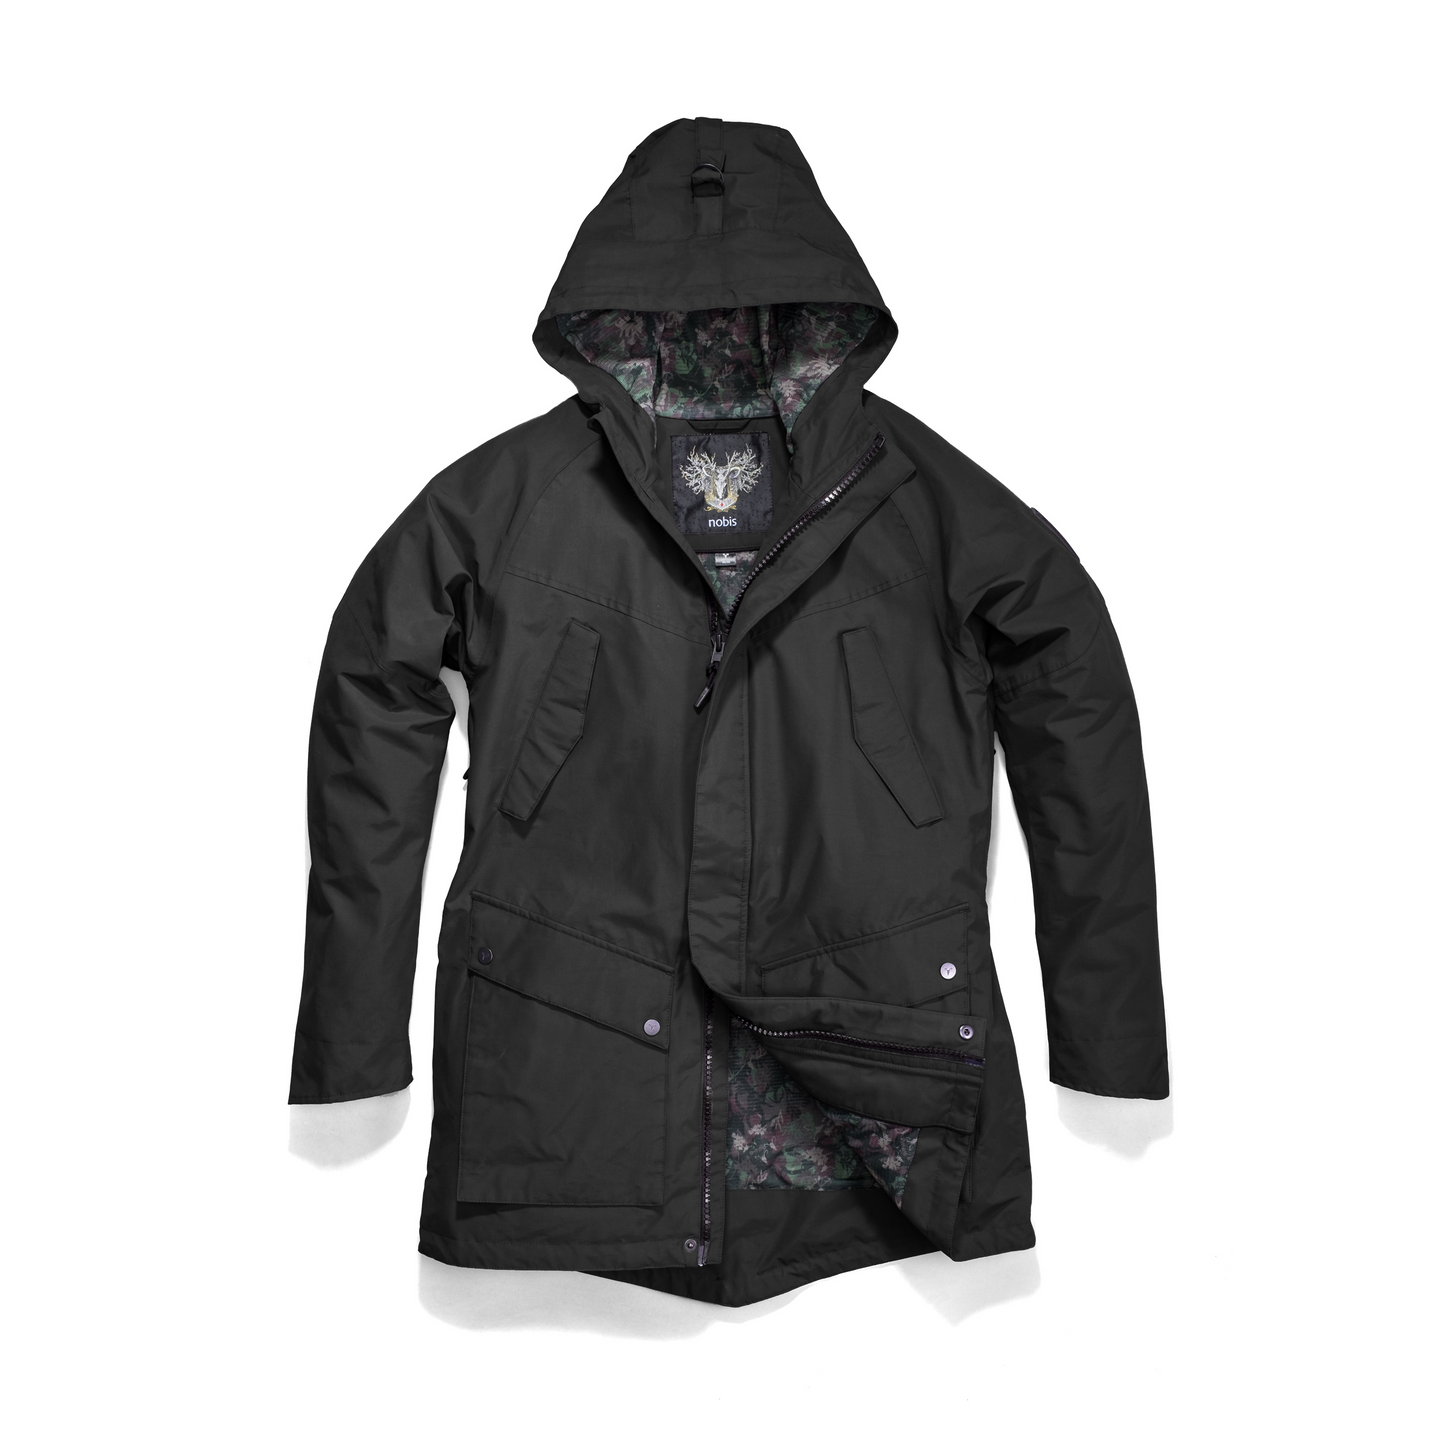 Men's hooded rain coat with hood in Black